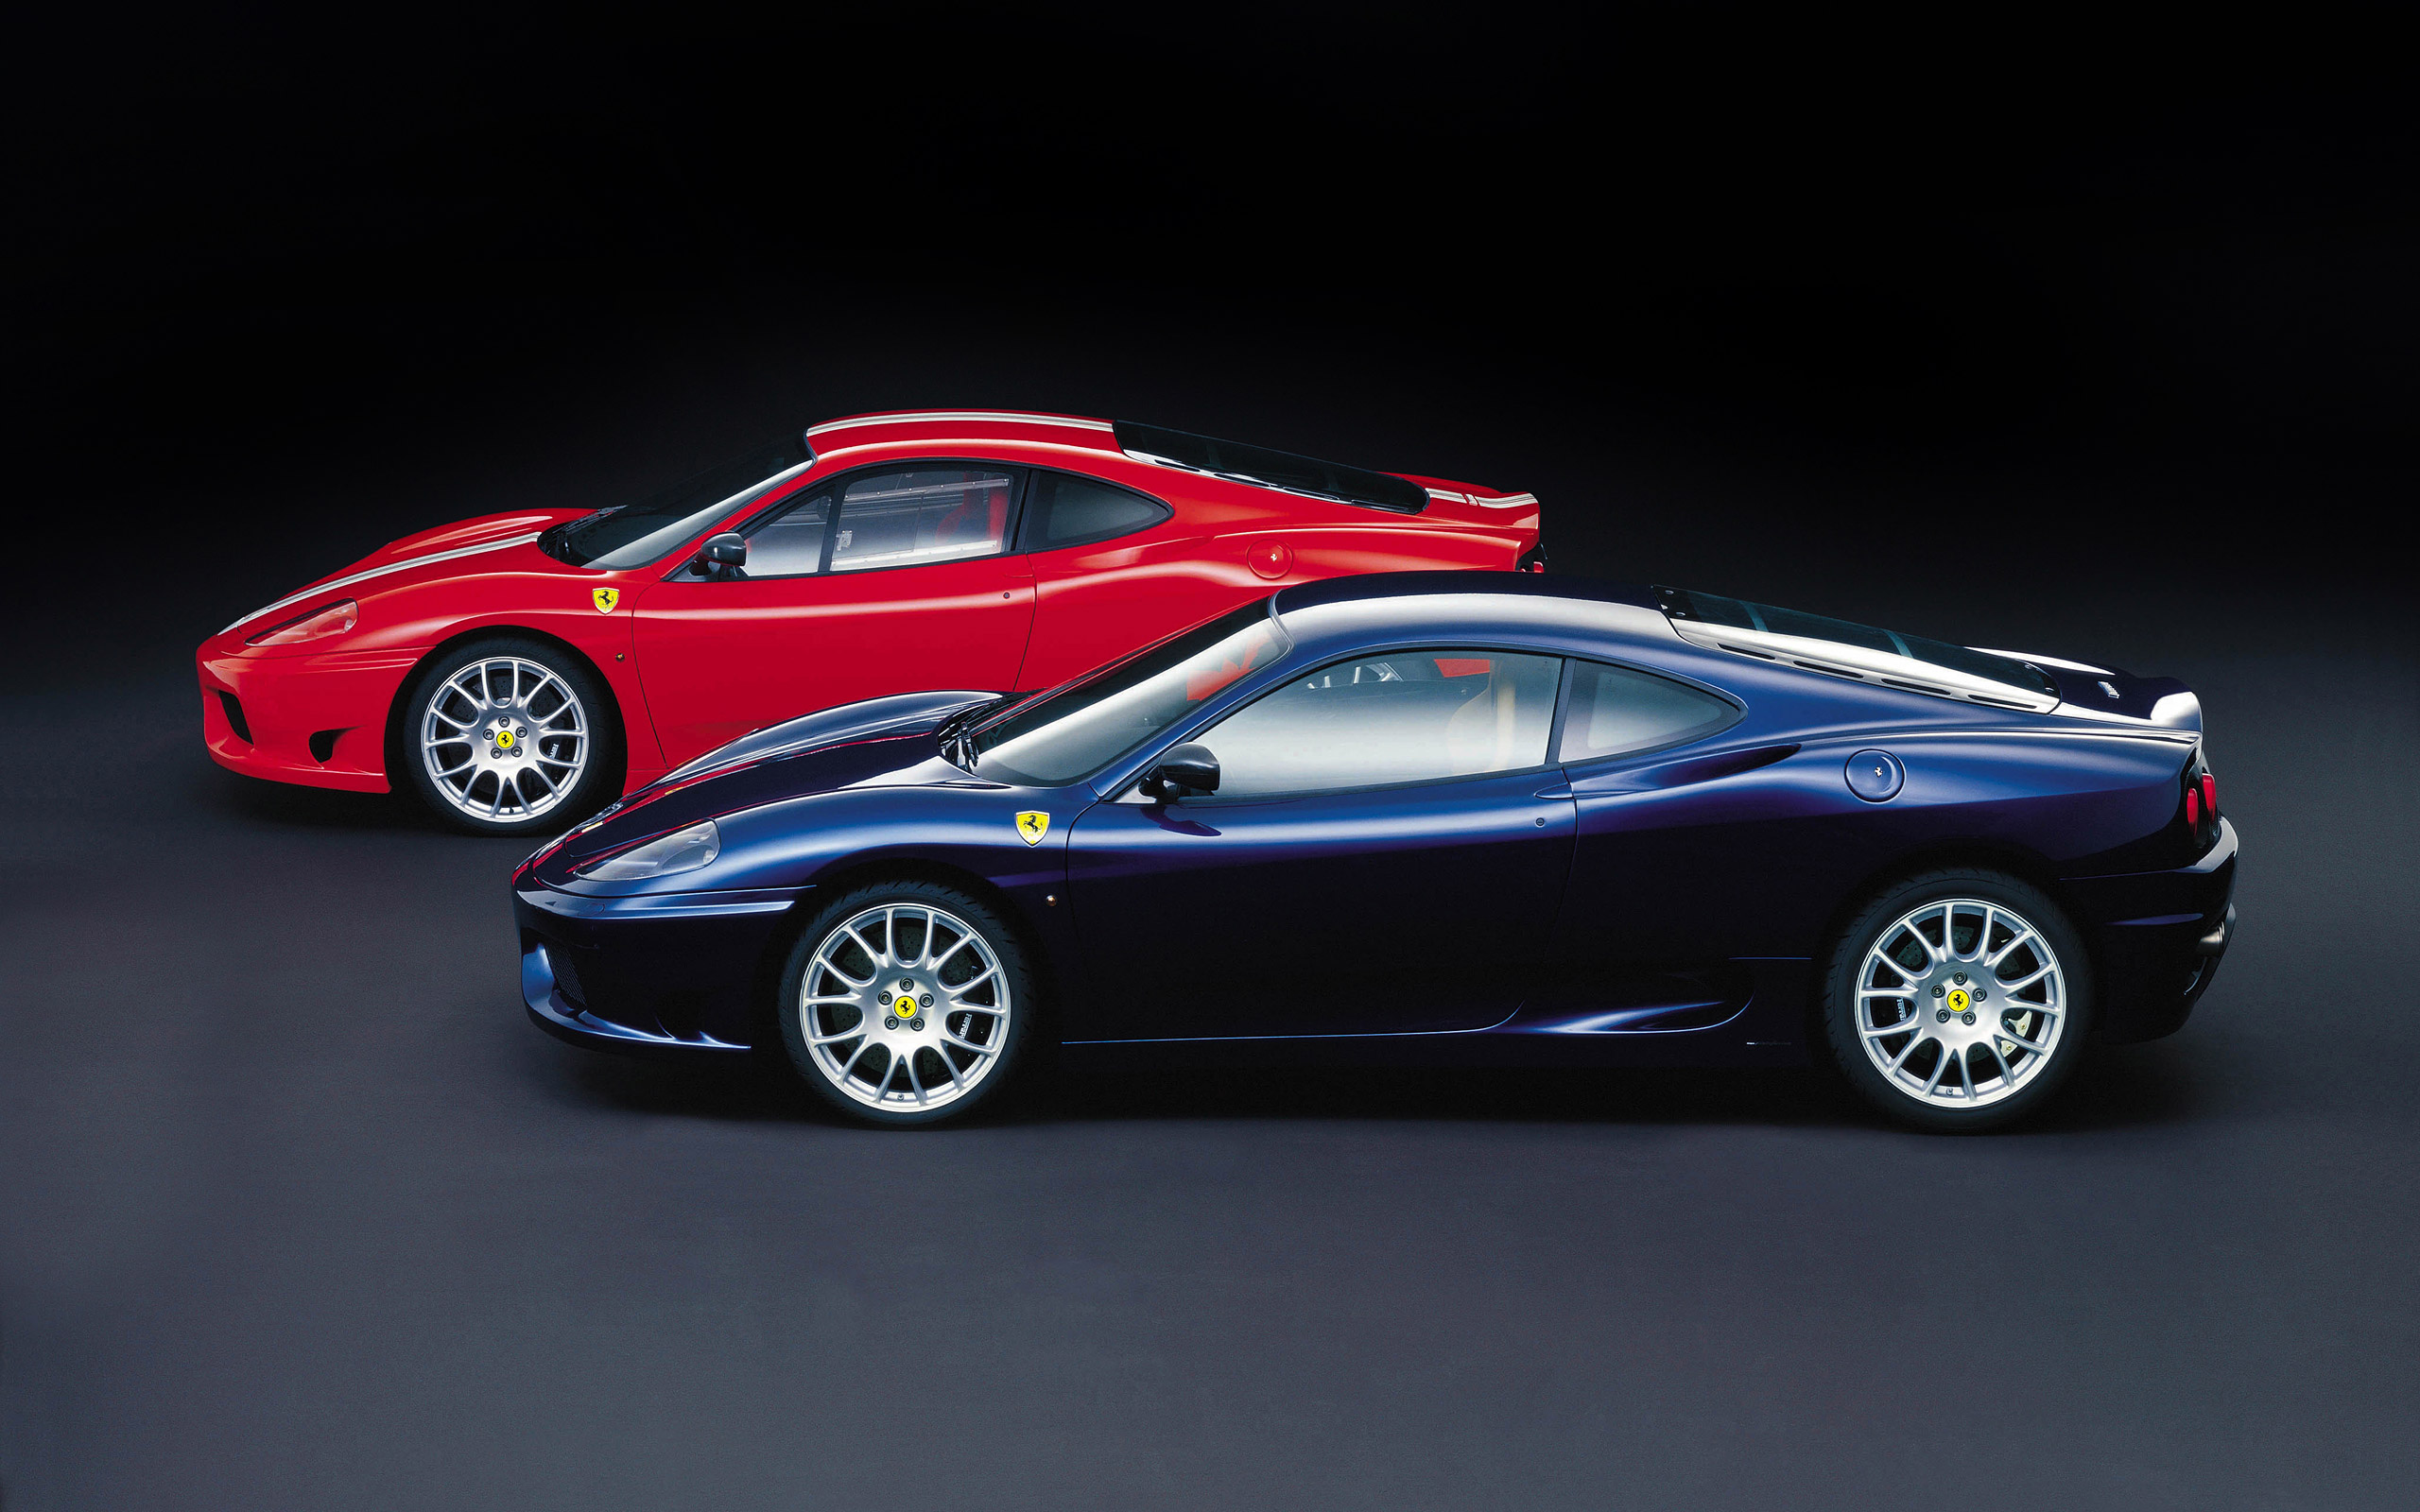  2003 Ferrari 360 Challenge Stradale Wallpaper.